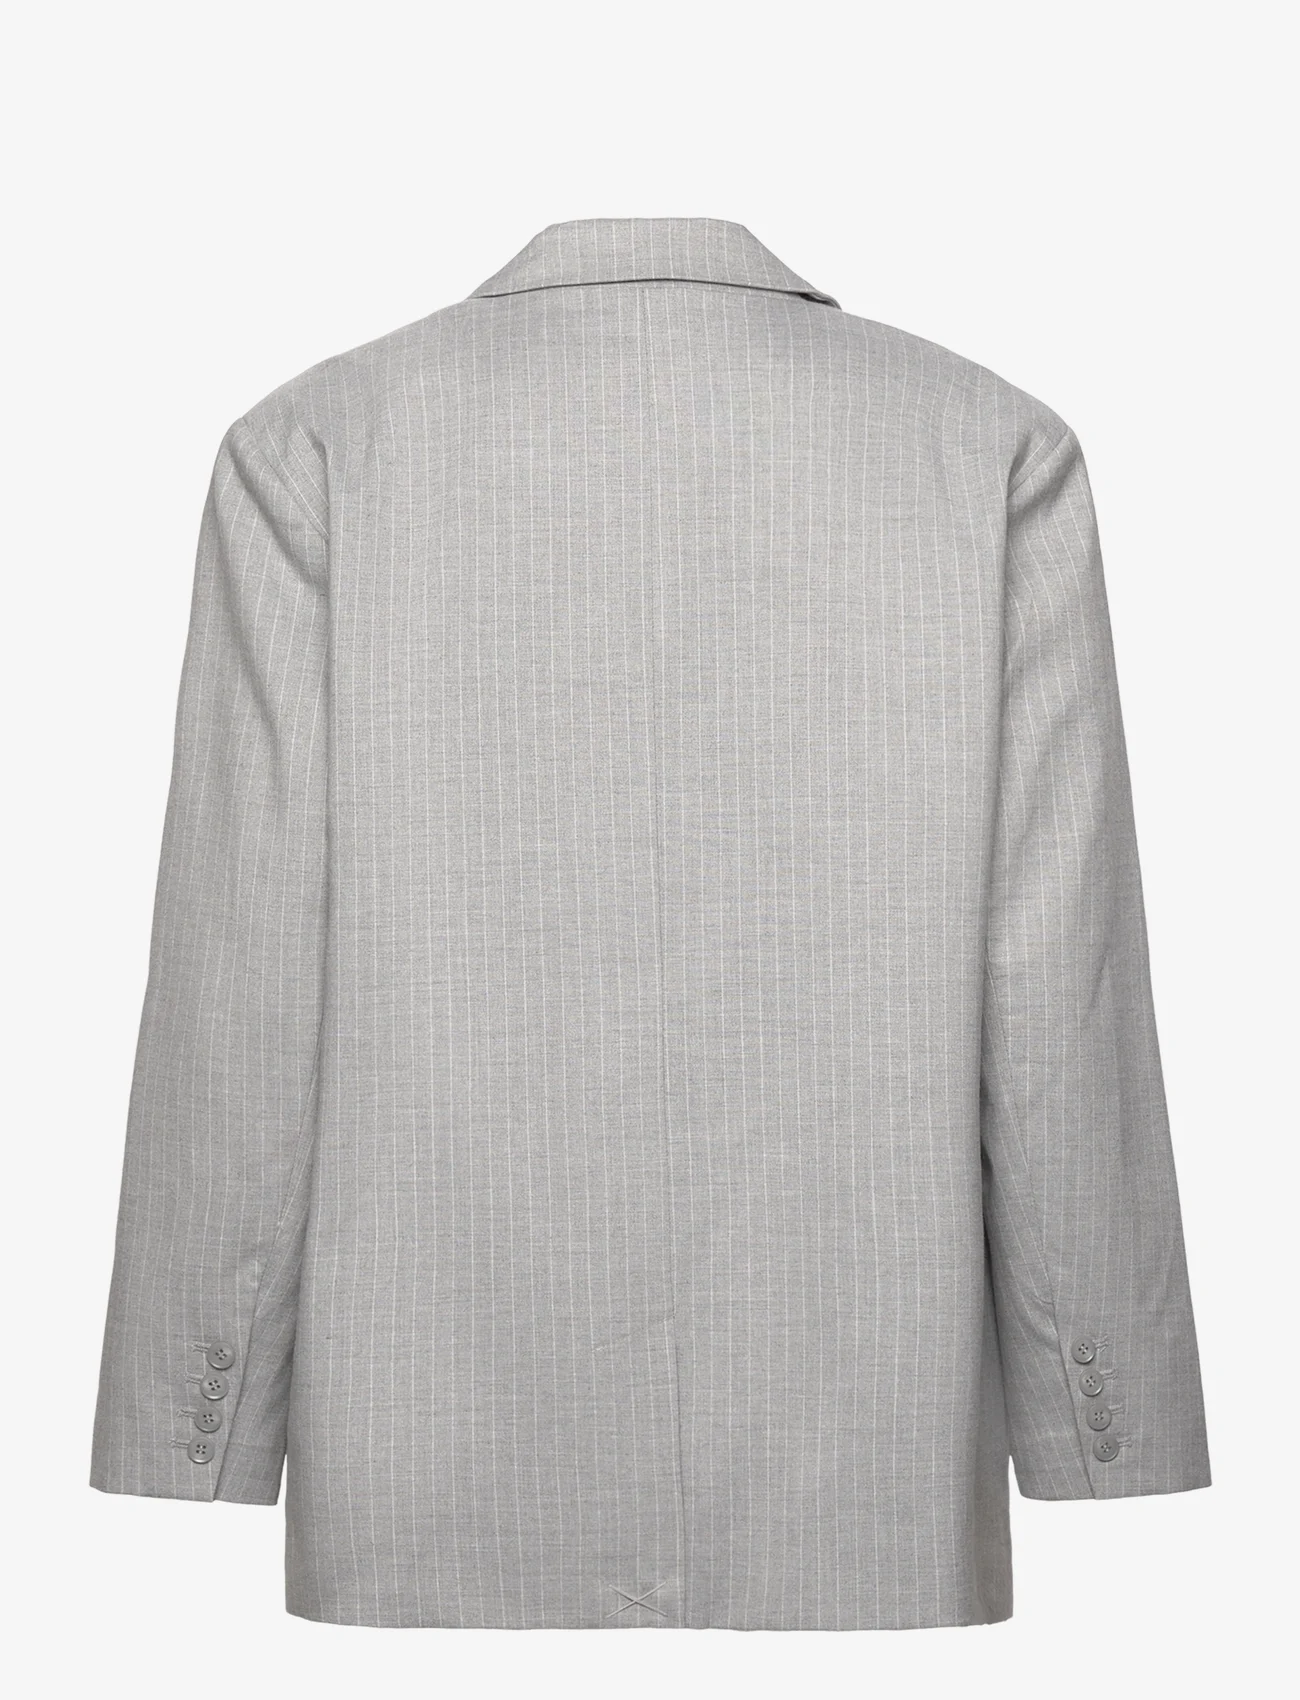 Gestuz - PaulaGZ pinstripe OZ blazer - feestelijke kleding voor outlet-prijzen - paula pinstribe grey - 1